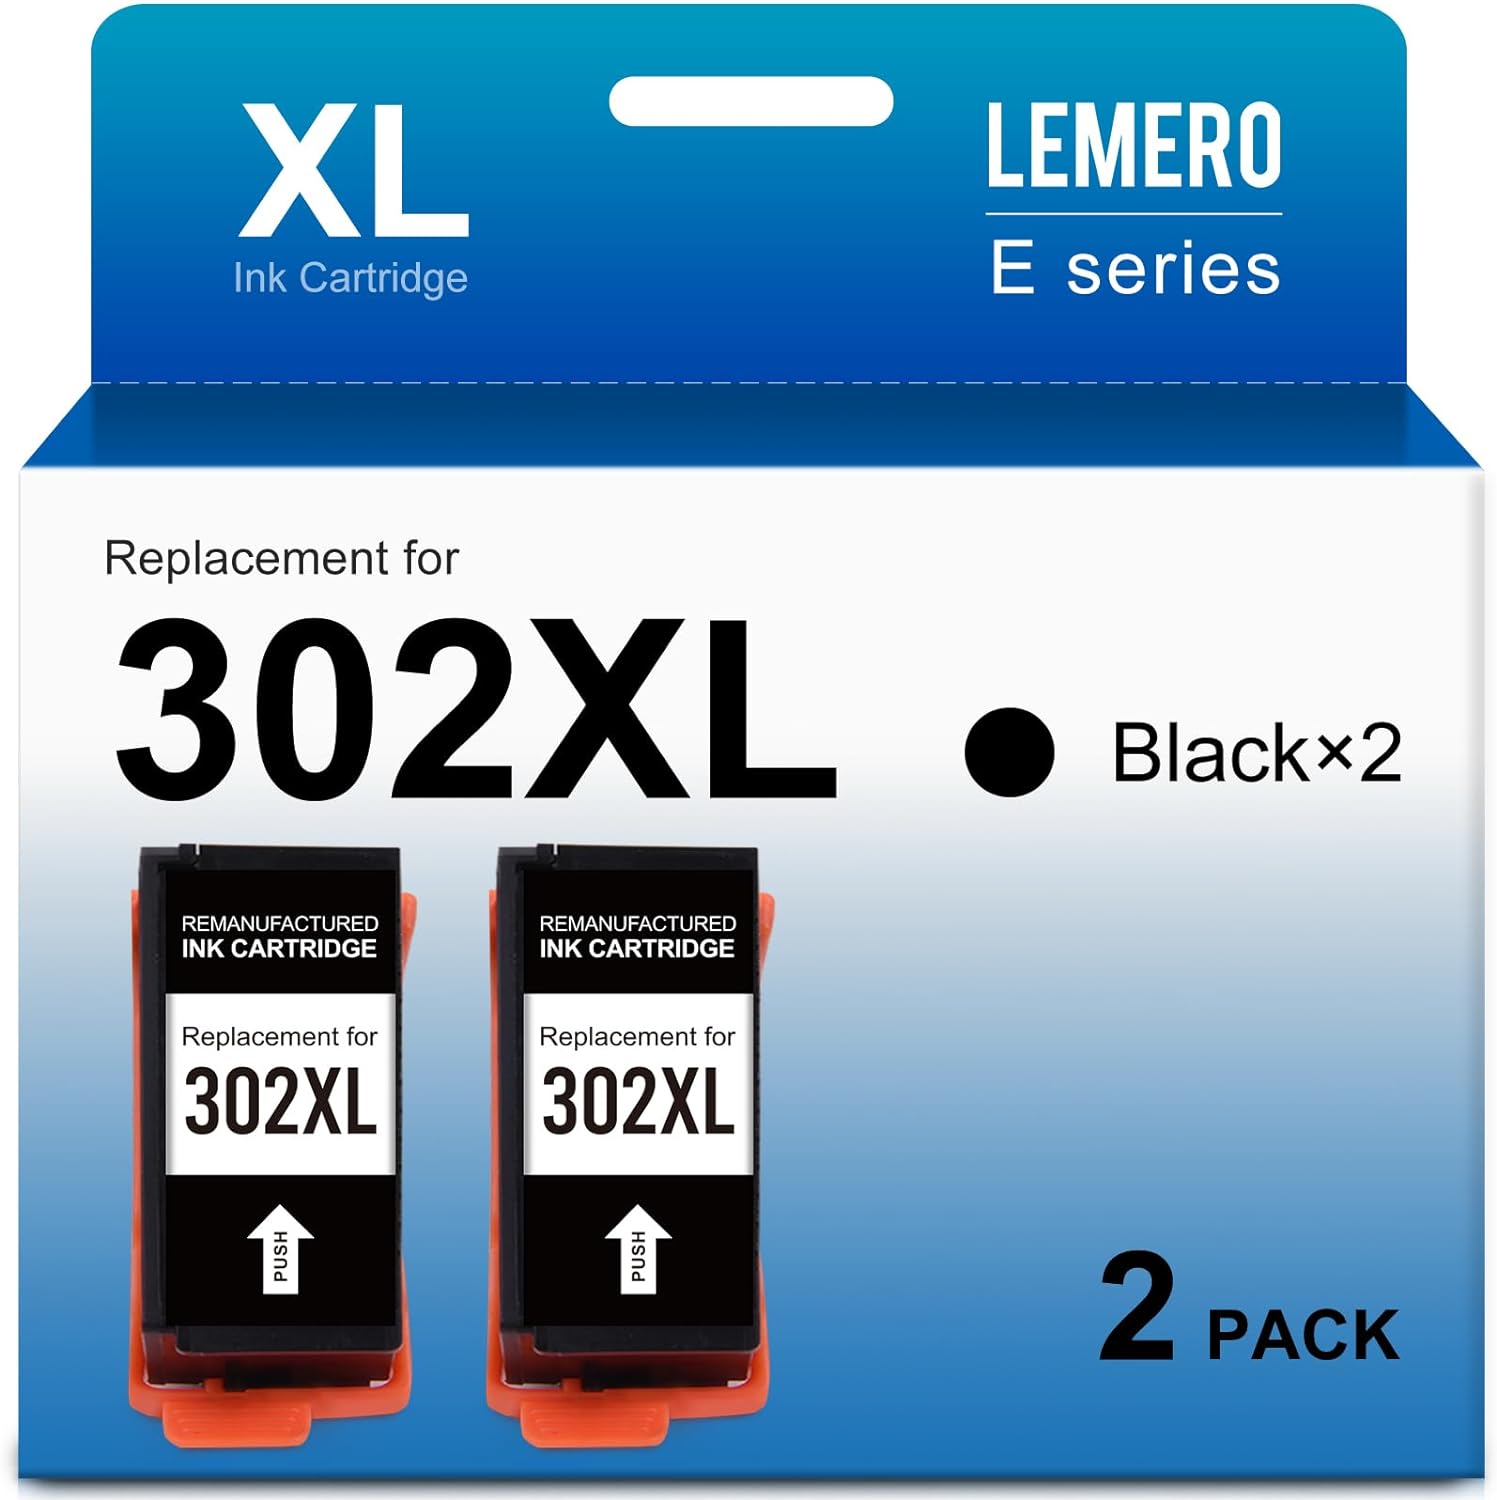 Epson 302XL Black 2 Pack LEMERO Remanufactured Ink Cartridge